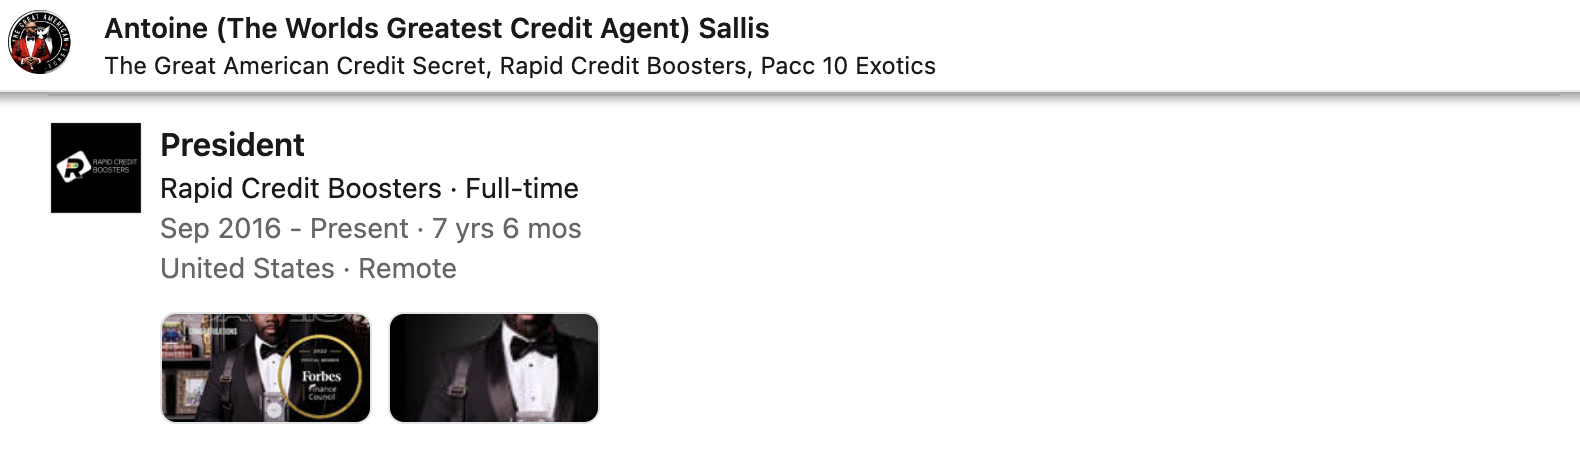 Antoine Sallis Rapid Credit Boosters
